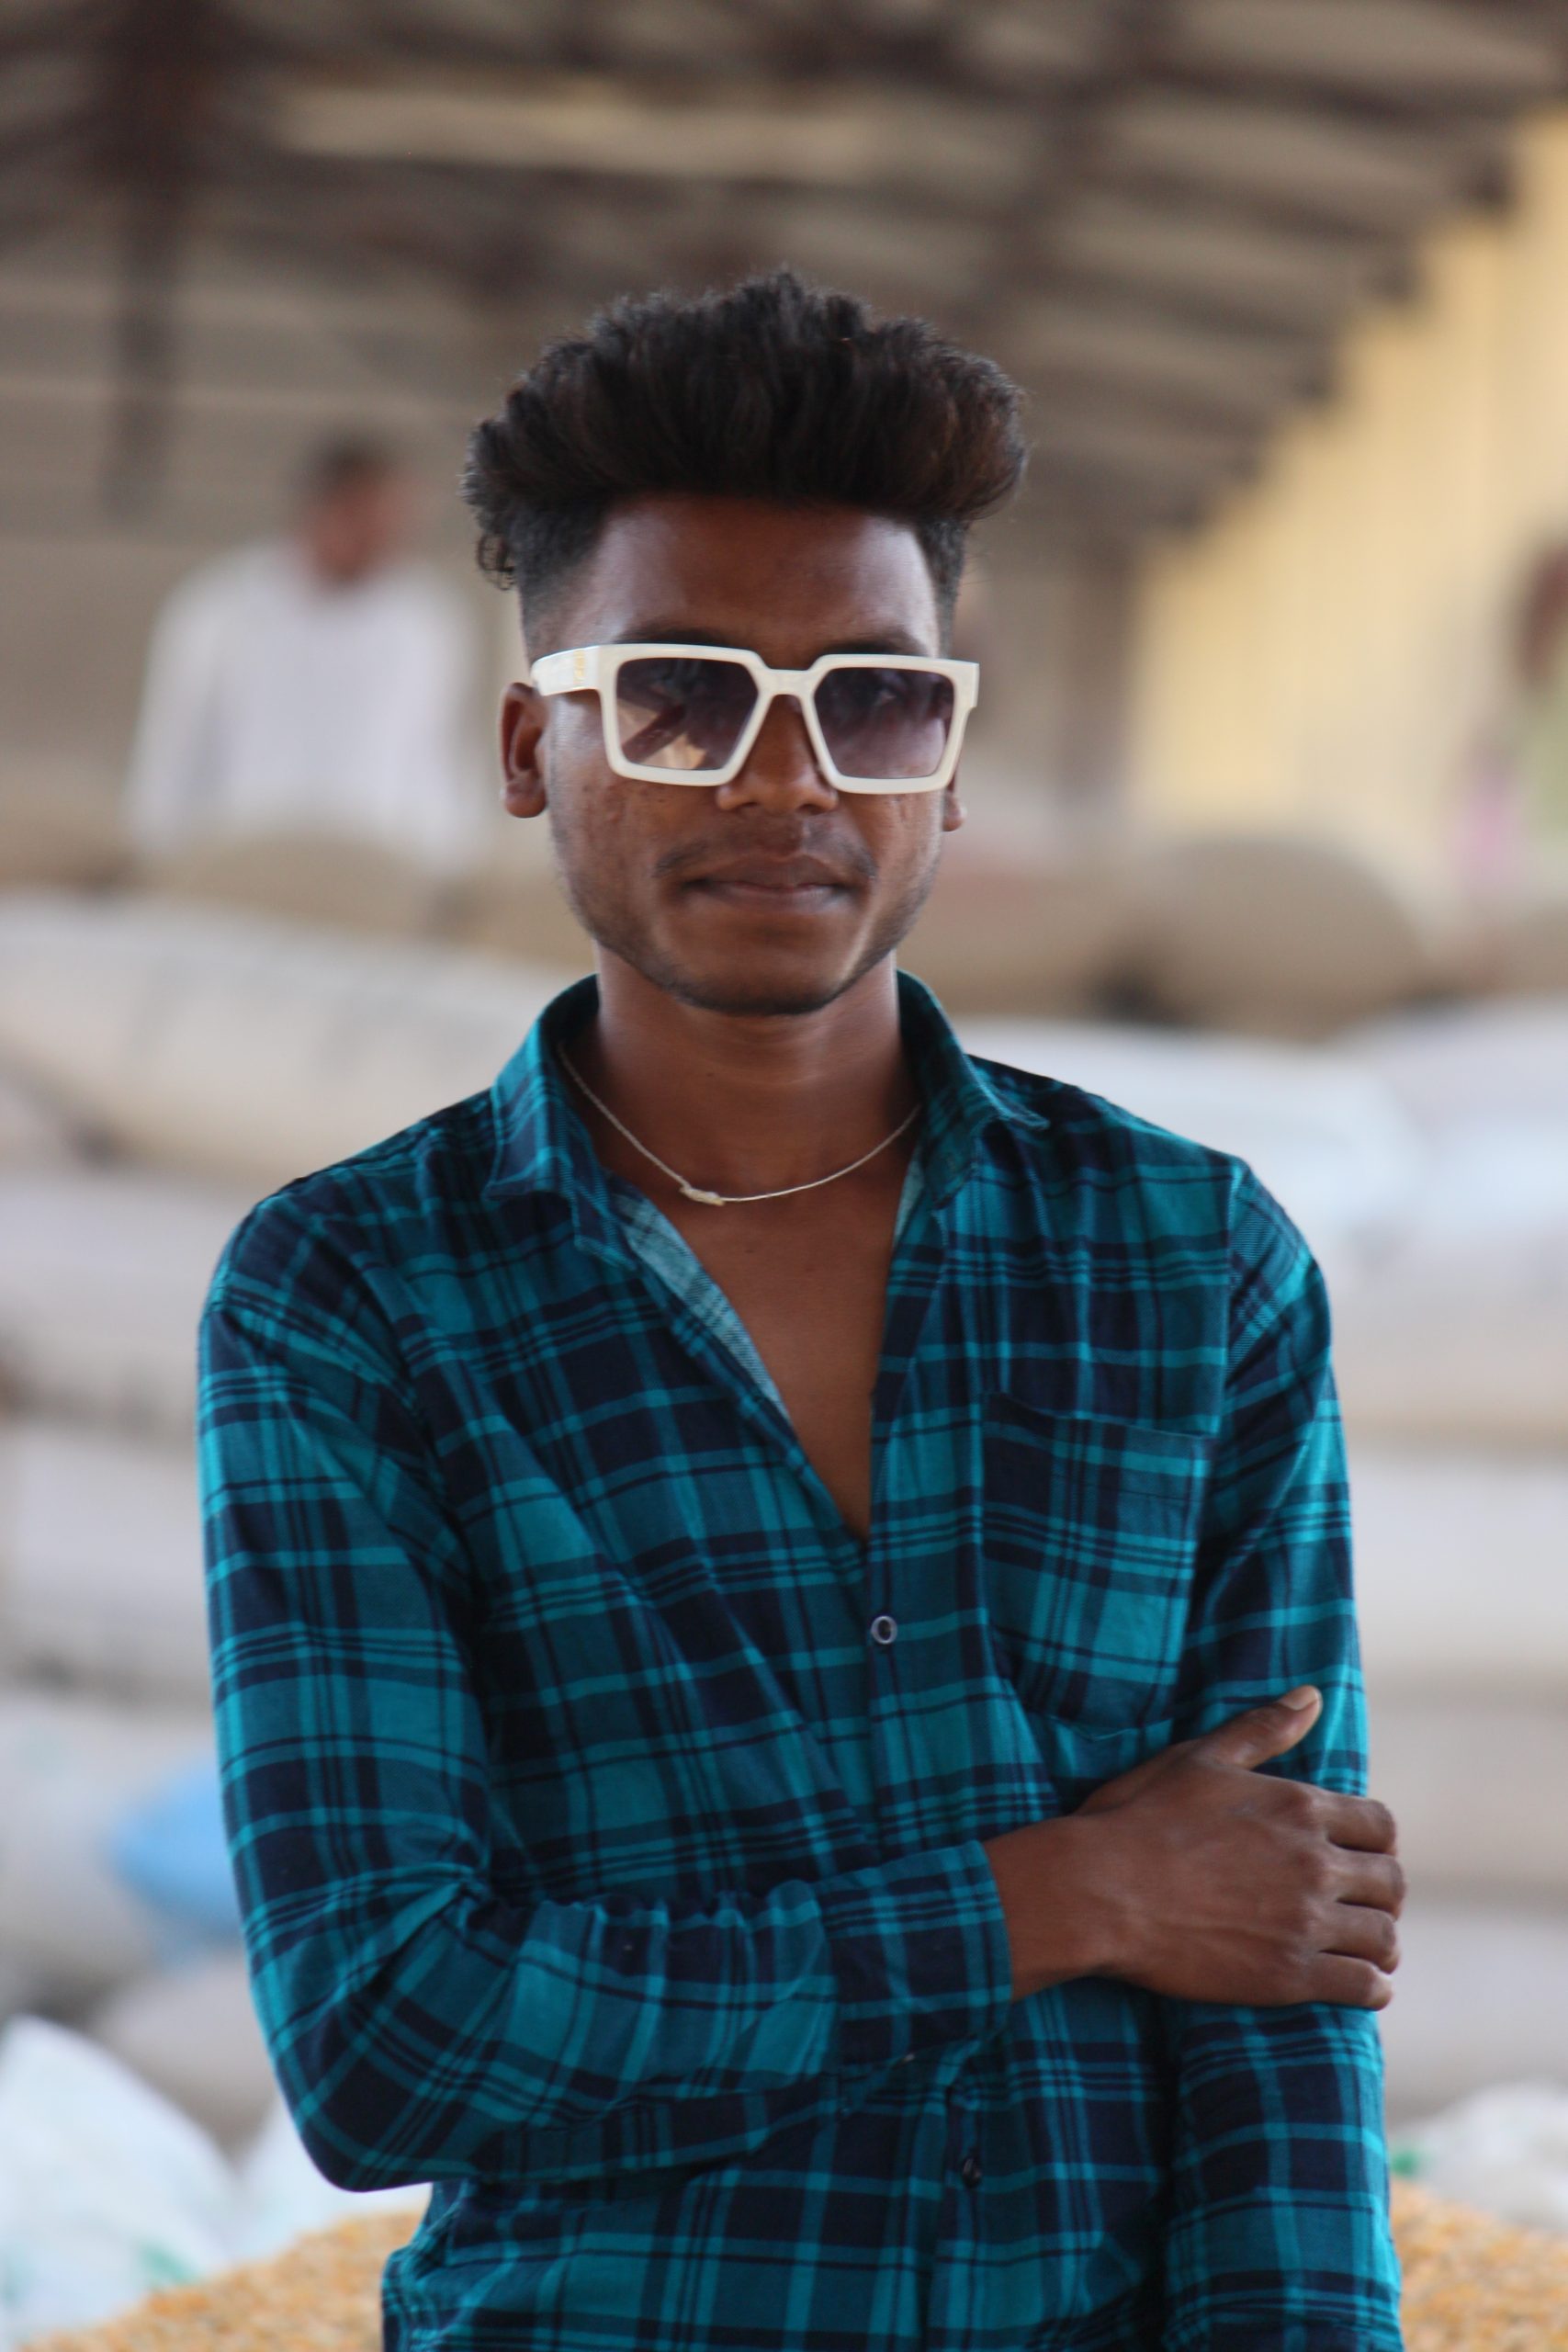 Boy posing while wearing Sunglasses